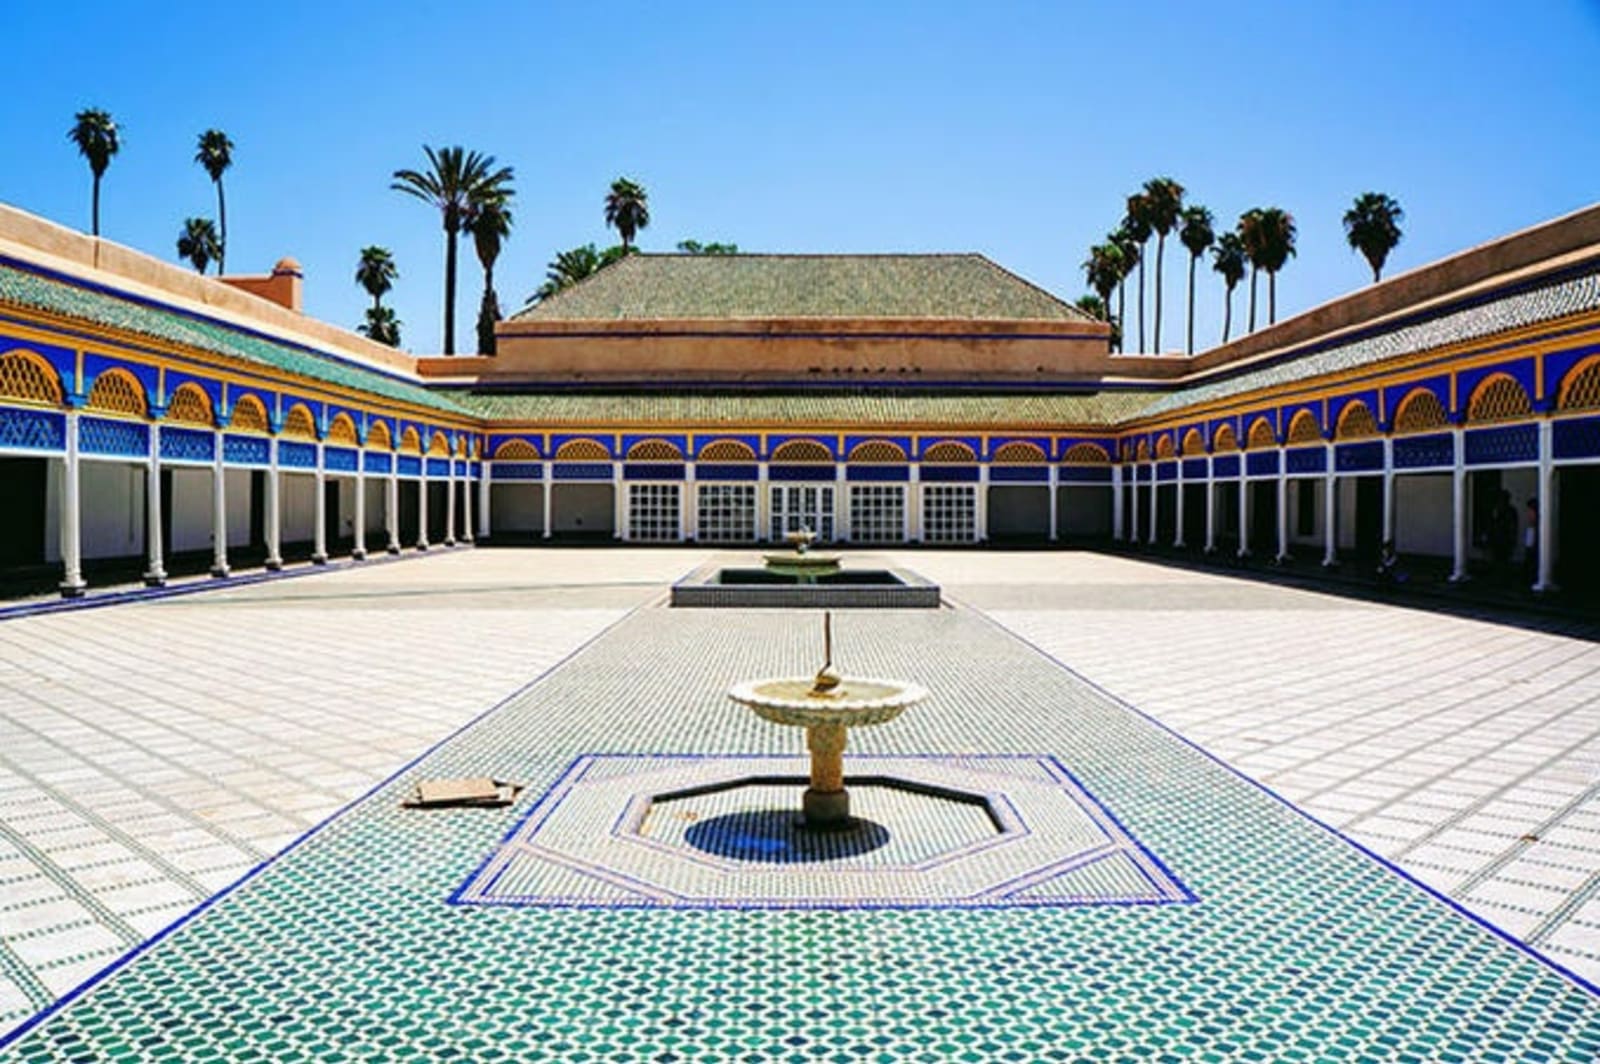 rs-bahia-palace-marrakech-shutterstock_723152365.jpg